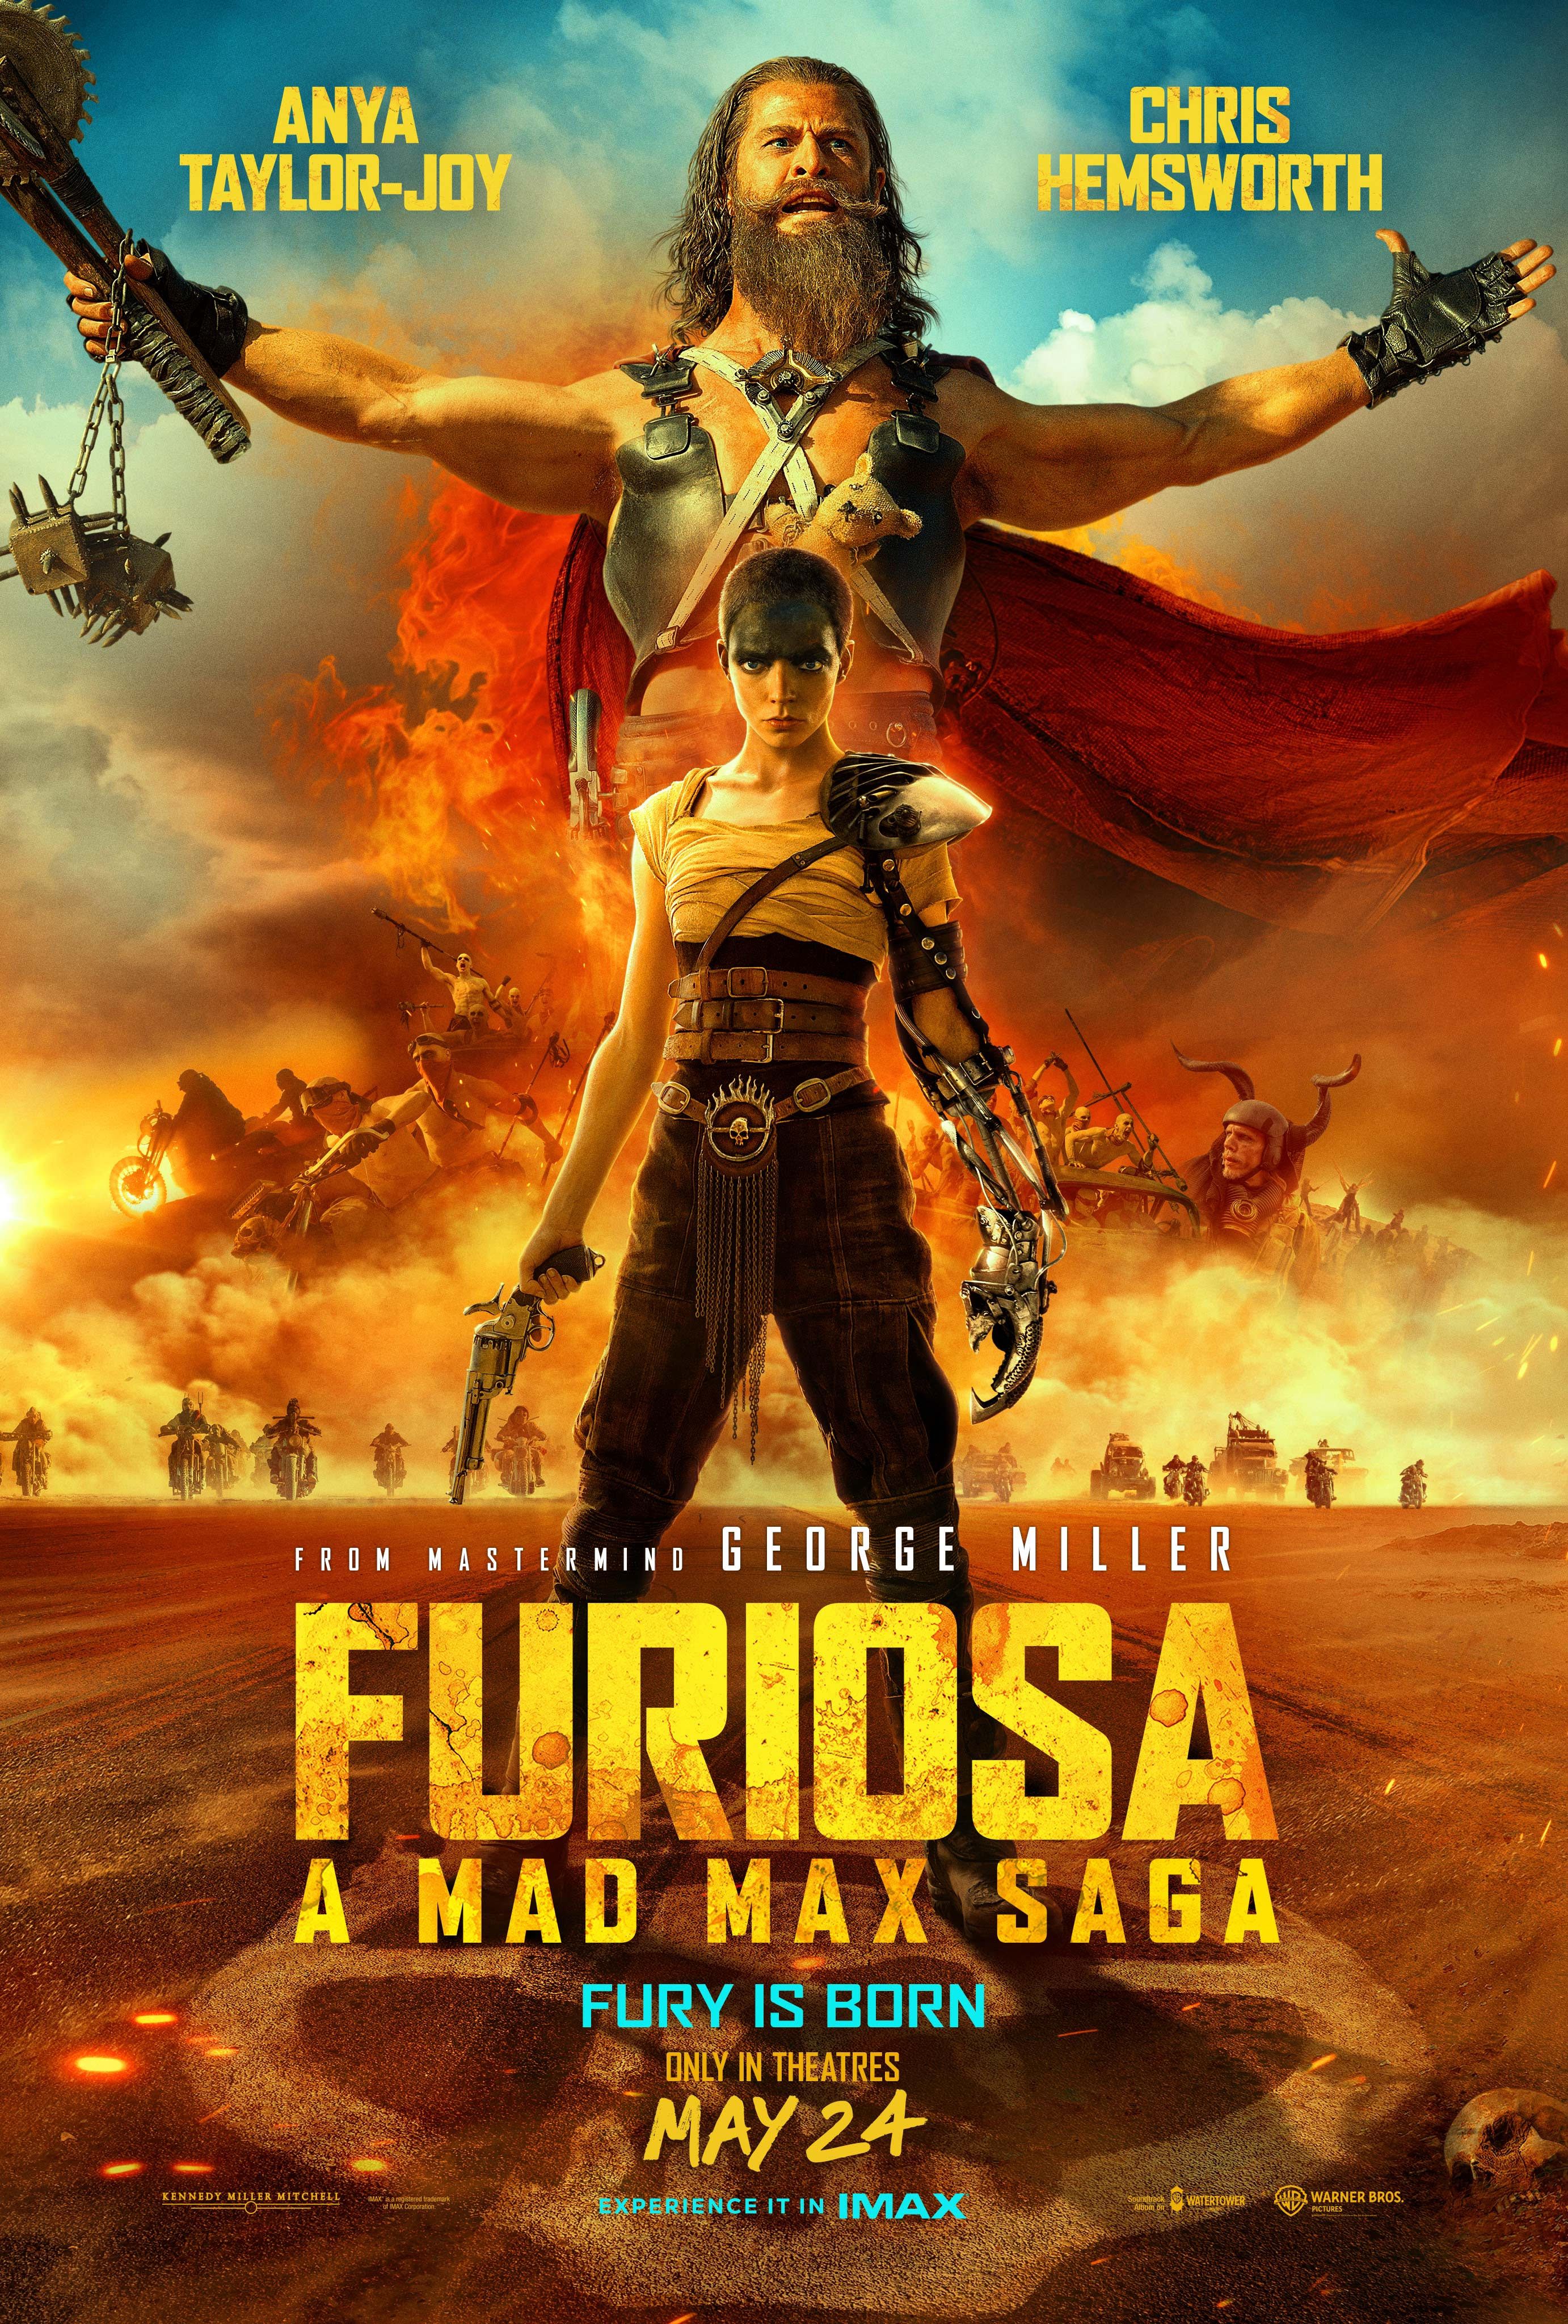 Furiosa A Mad Max Saga poster showing Anya Taylor Joy as Furiosa and Chris Hemsworth standing in front of a biker gang